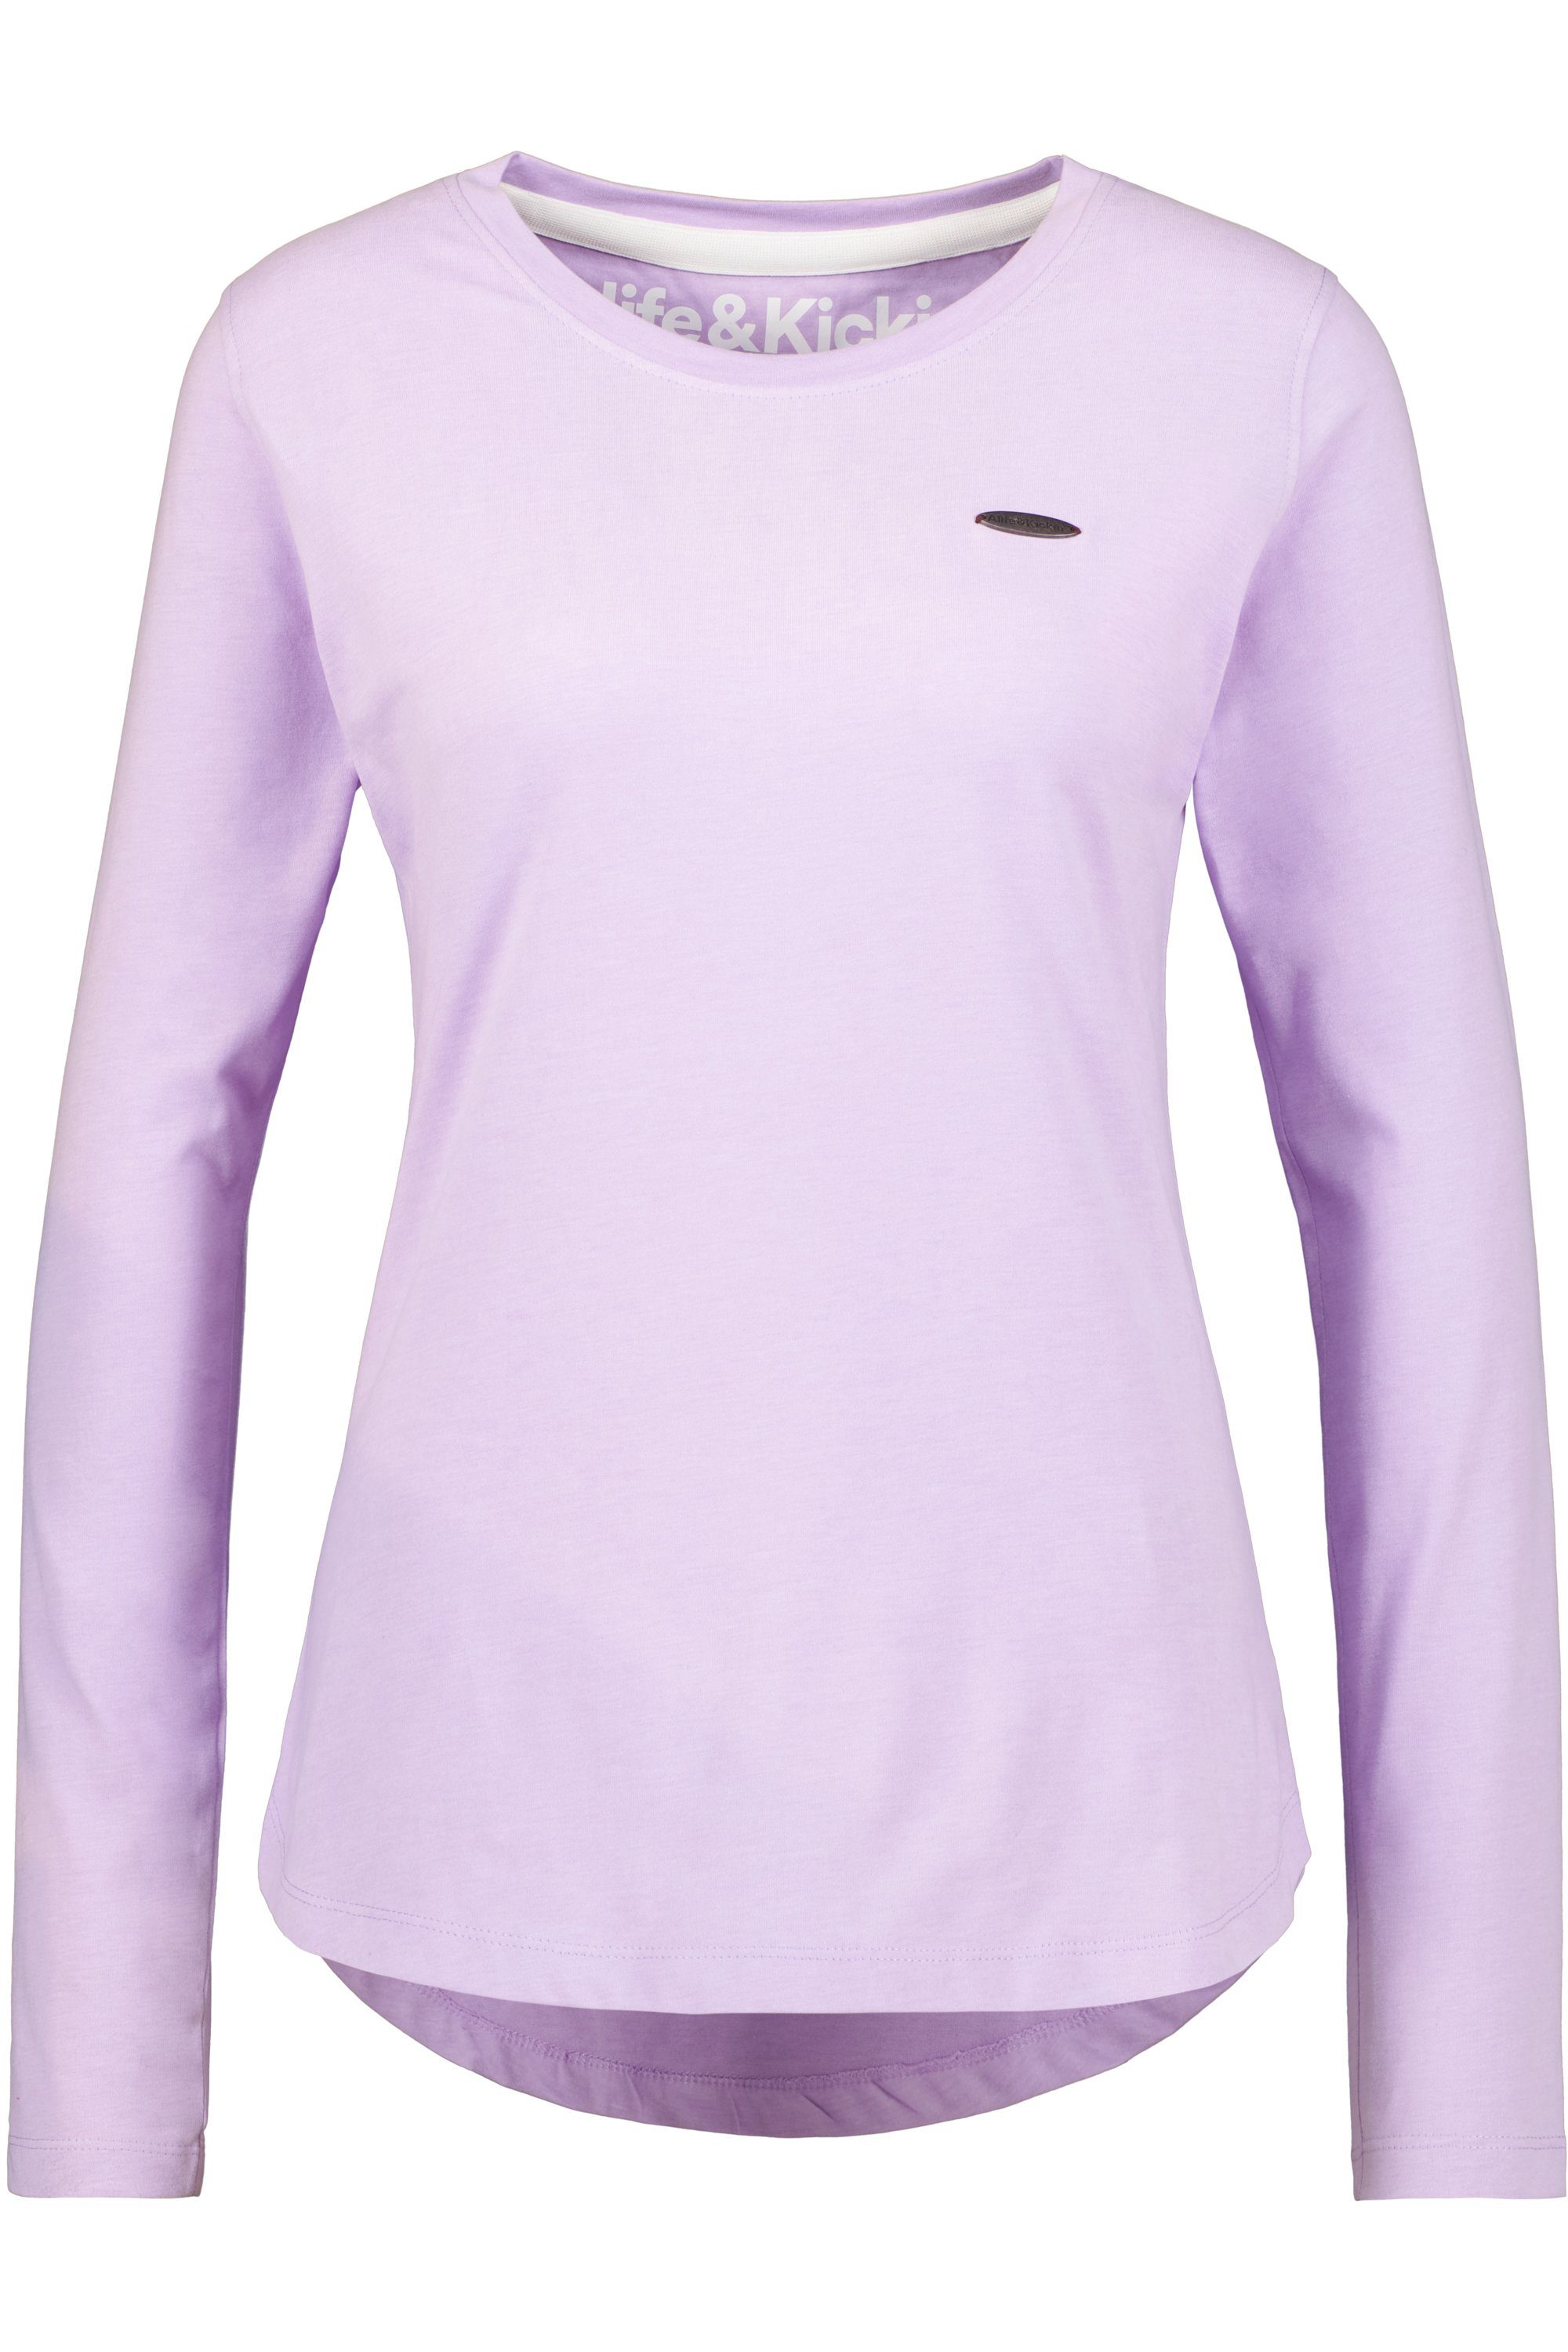 LeaAK Kickin lavender Langarmshirt, & A Langarmshirt Damen Longsleeve Alife Shirt digital melange